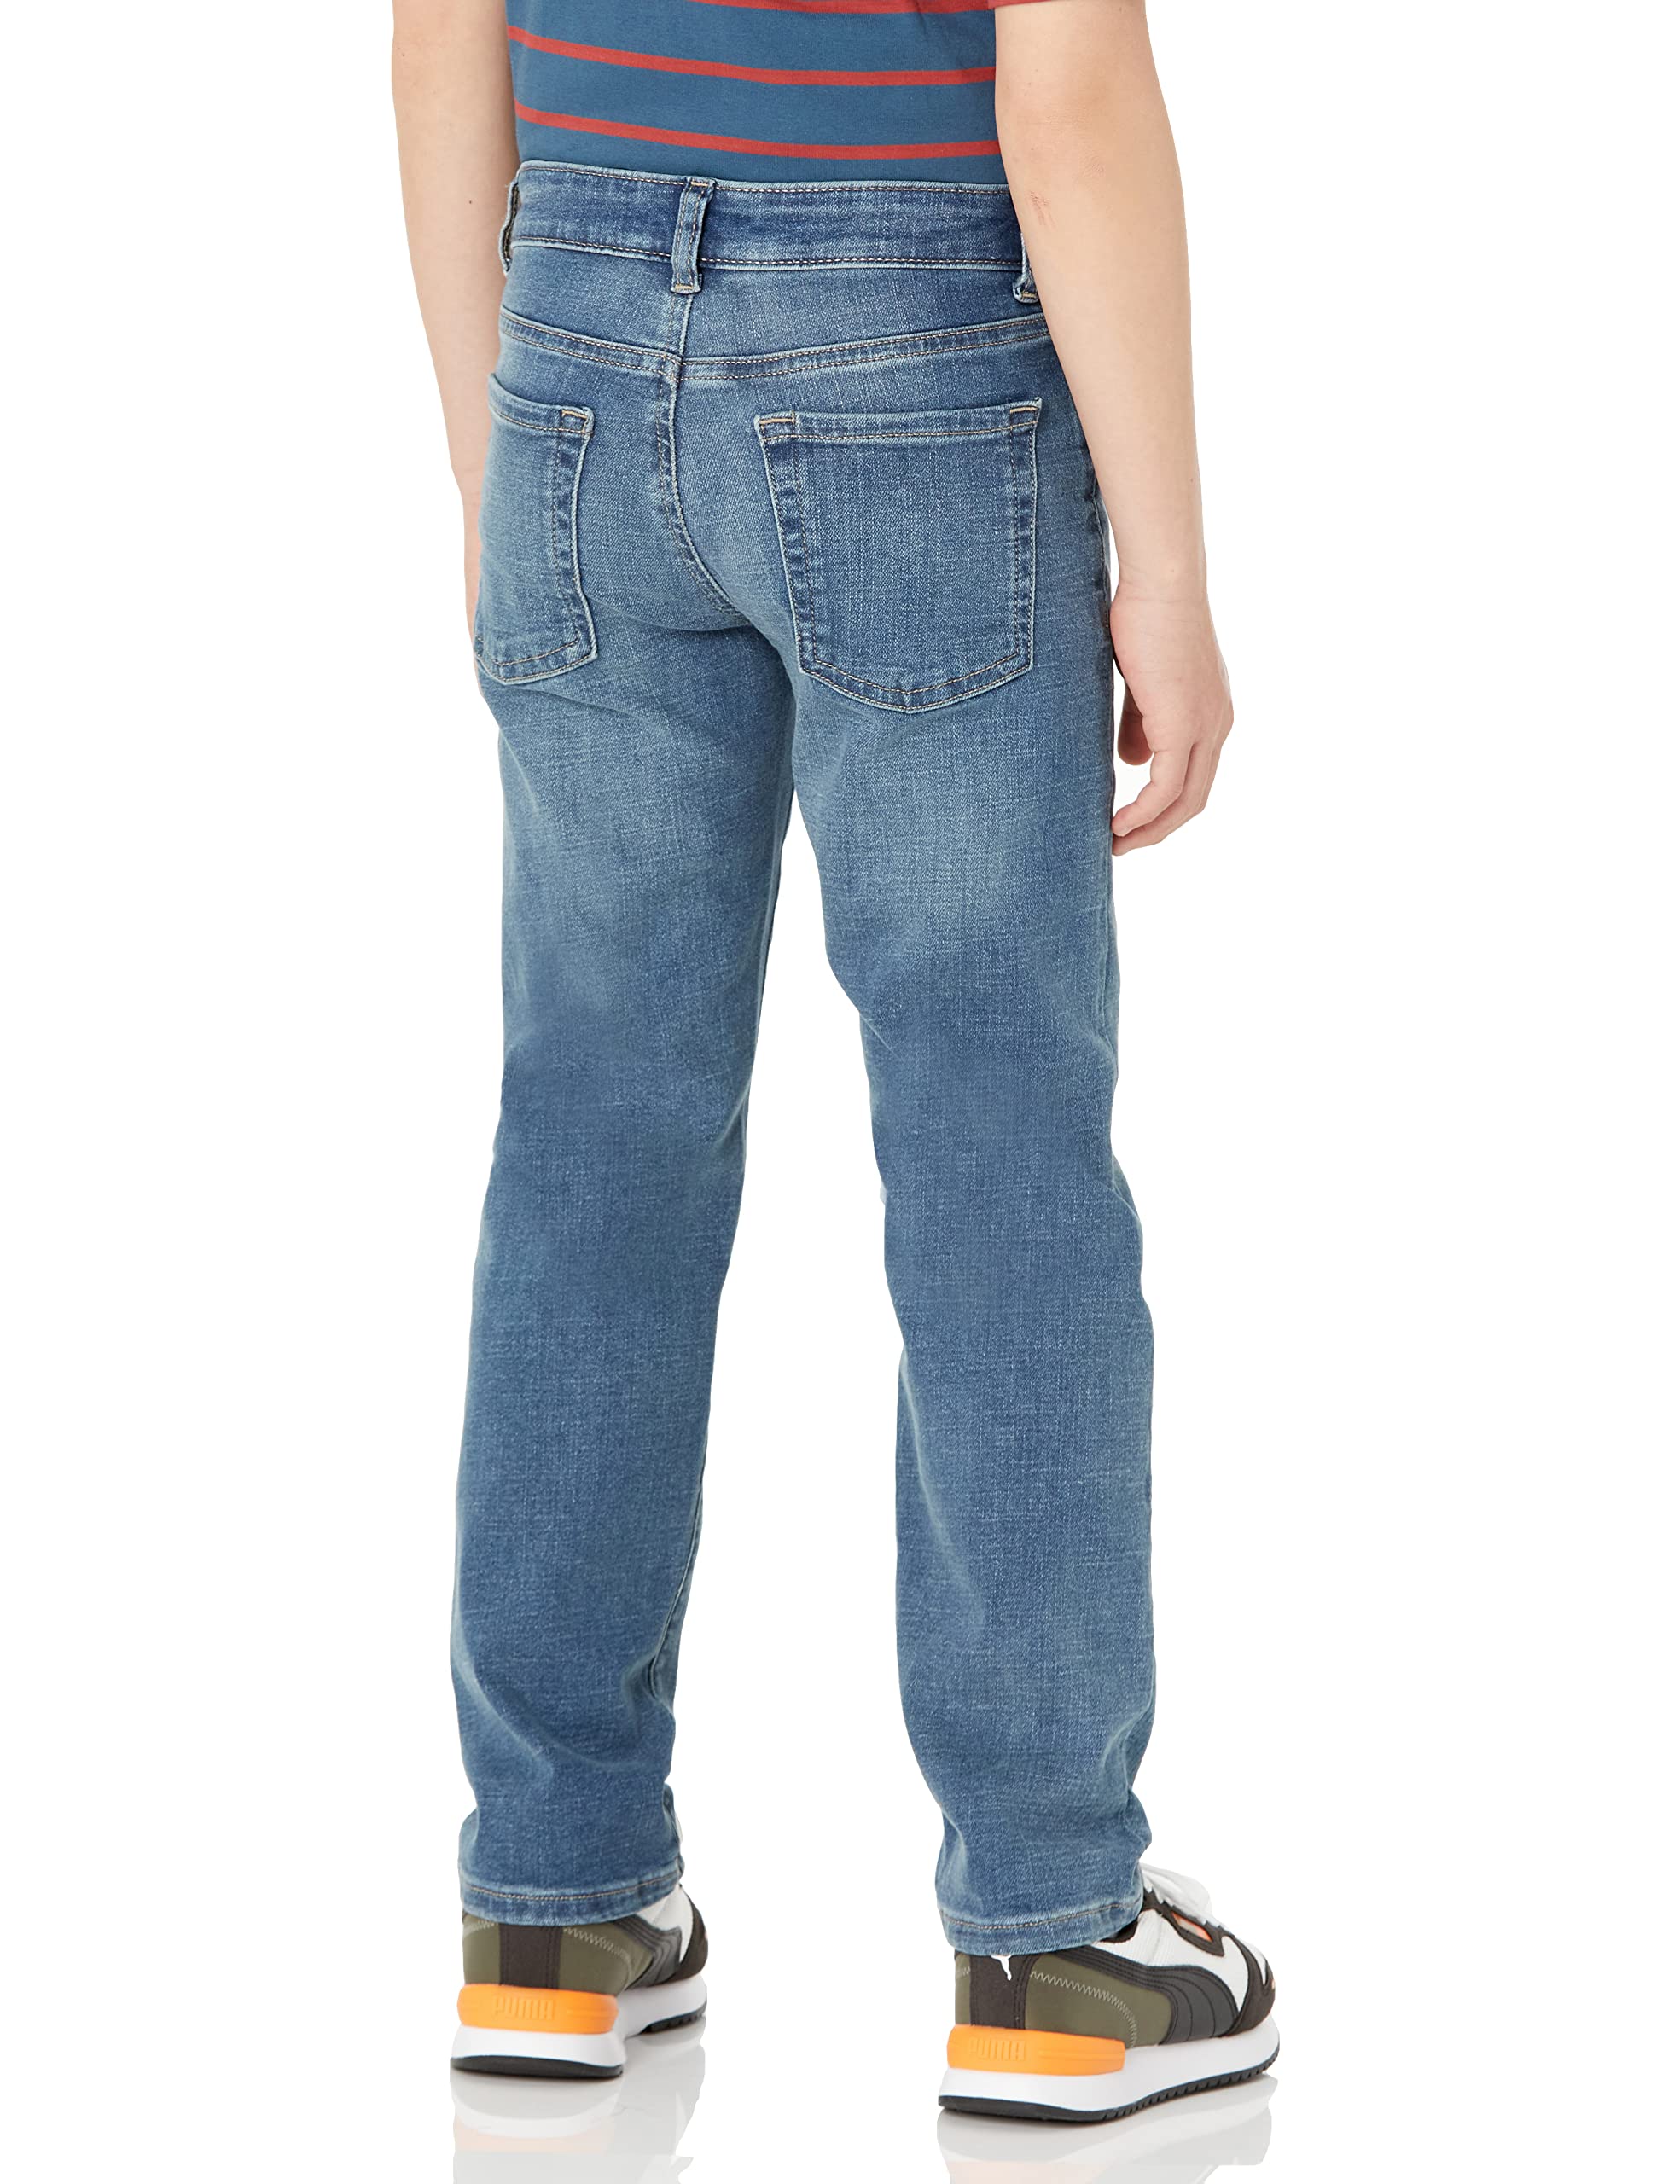 Amazon Essentials Boys' Regular Straight-Fit Jeans